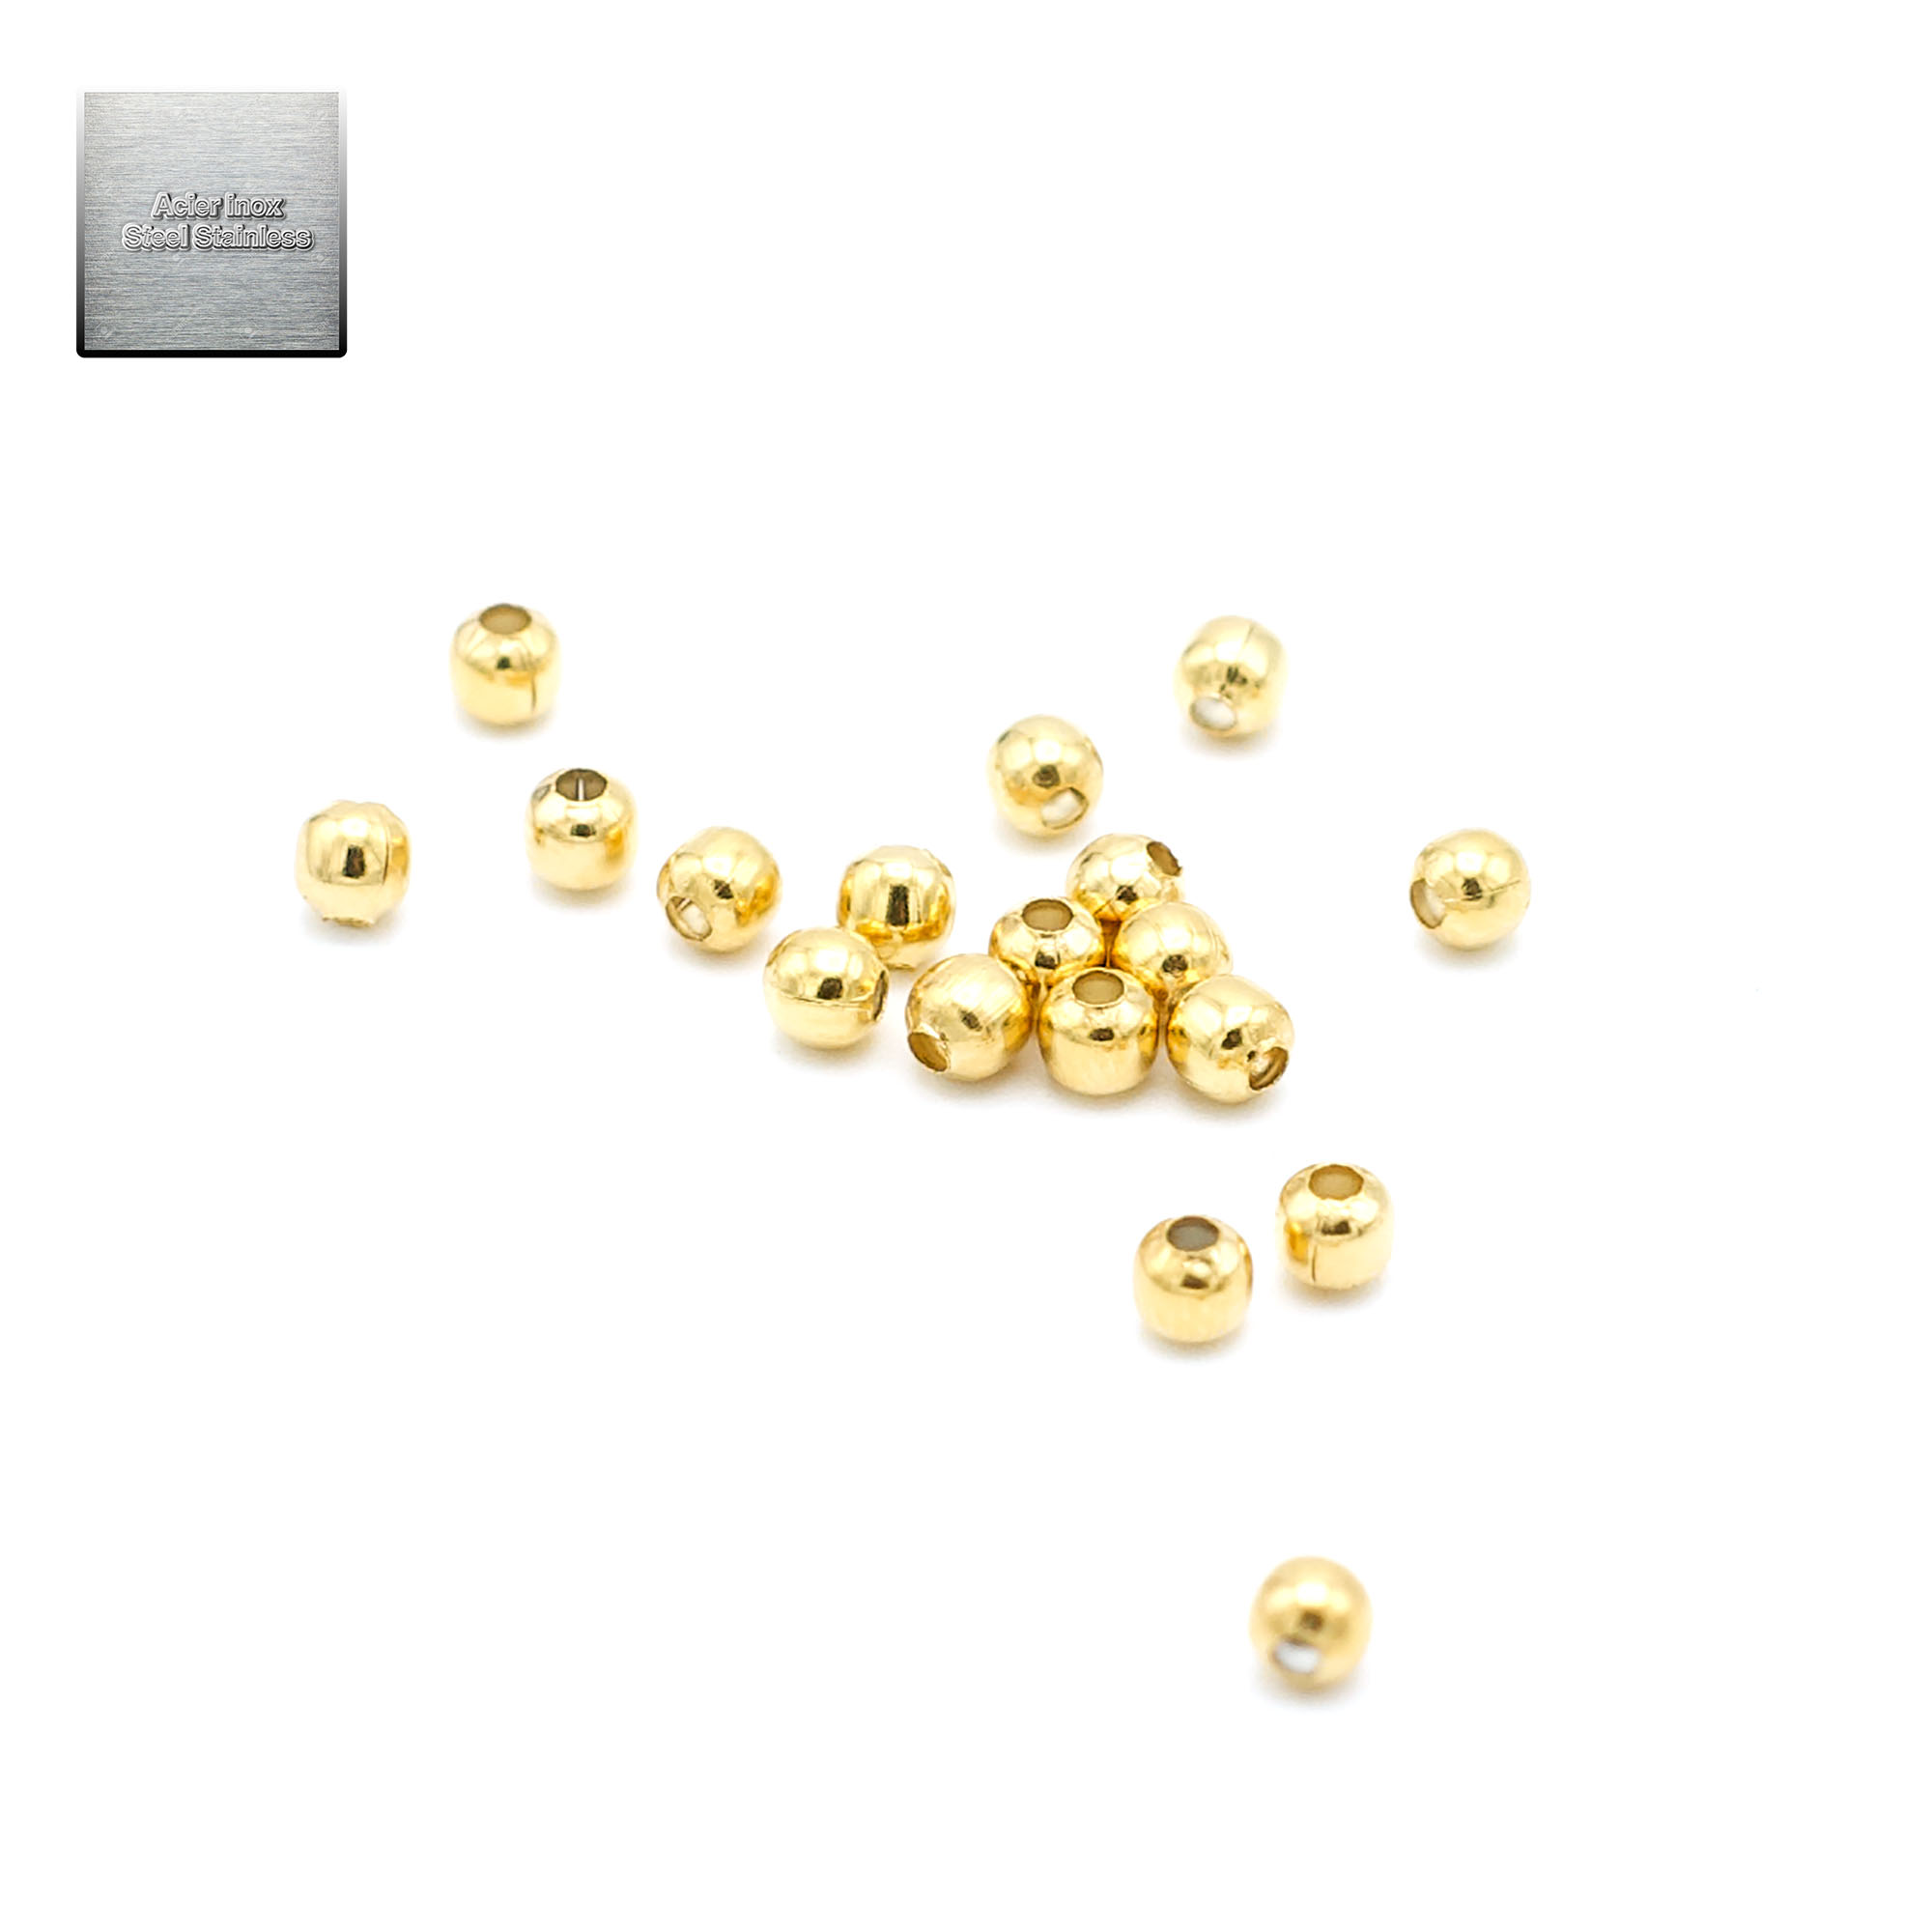 Acier inox doré: 100 perles passantes ronde 3 mm, steel stainless